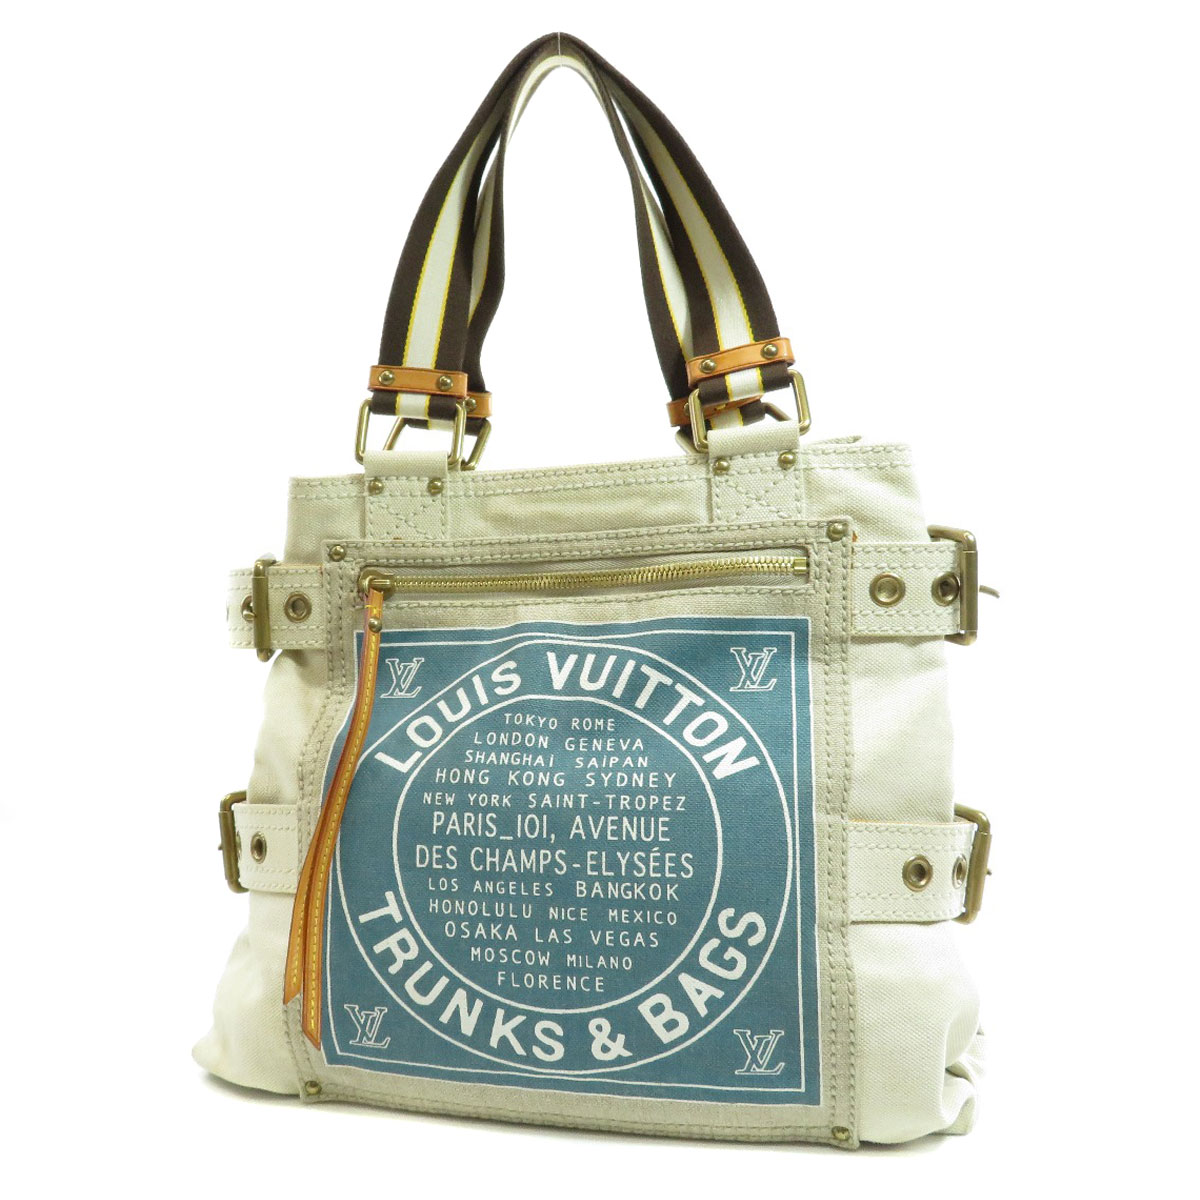 buy branded handbags online